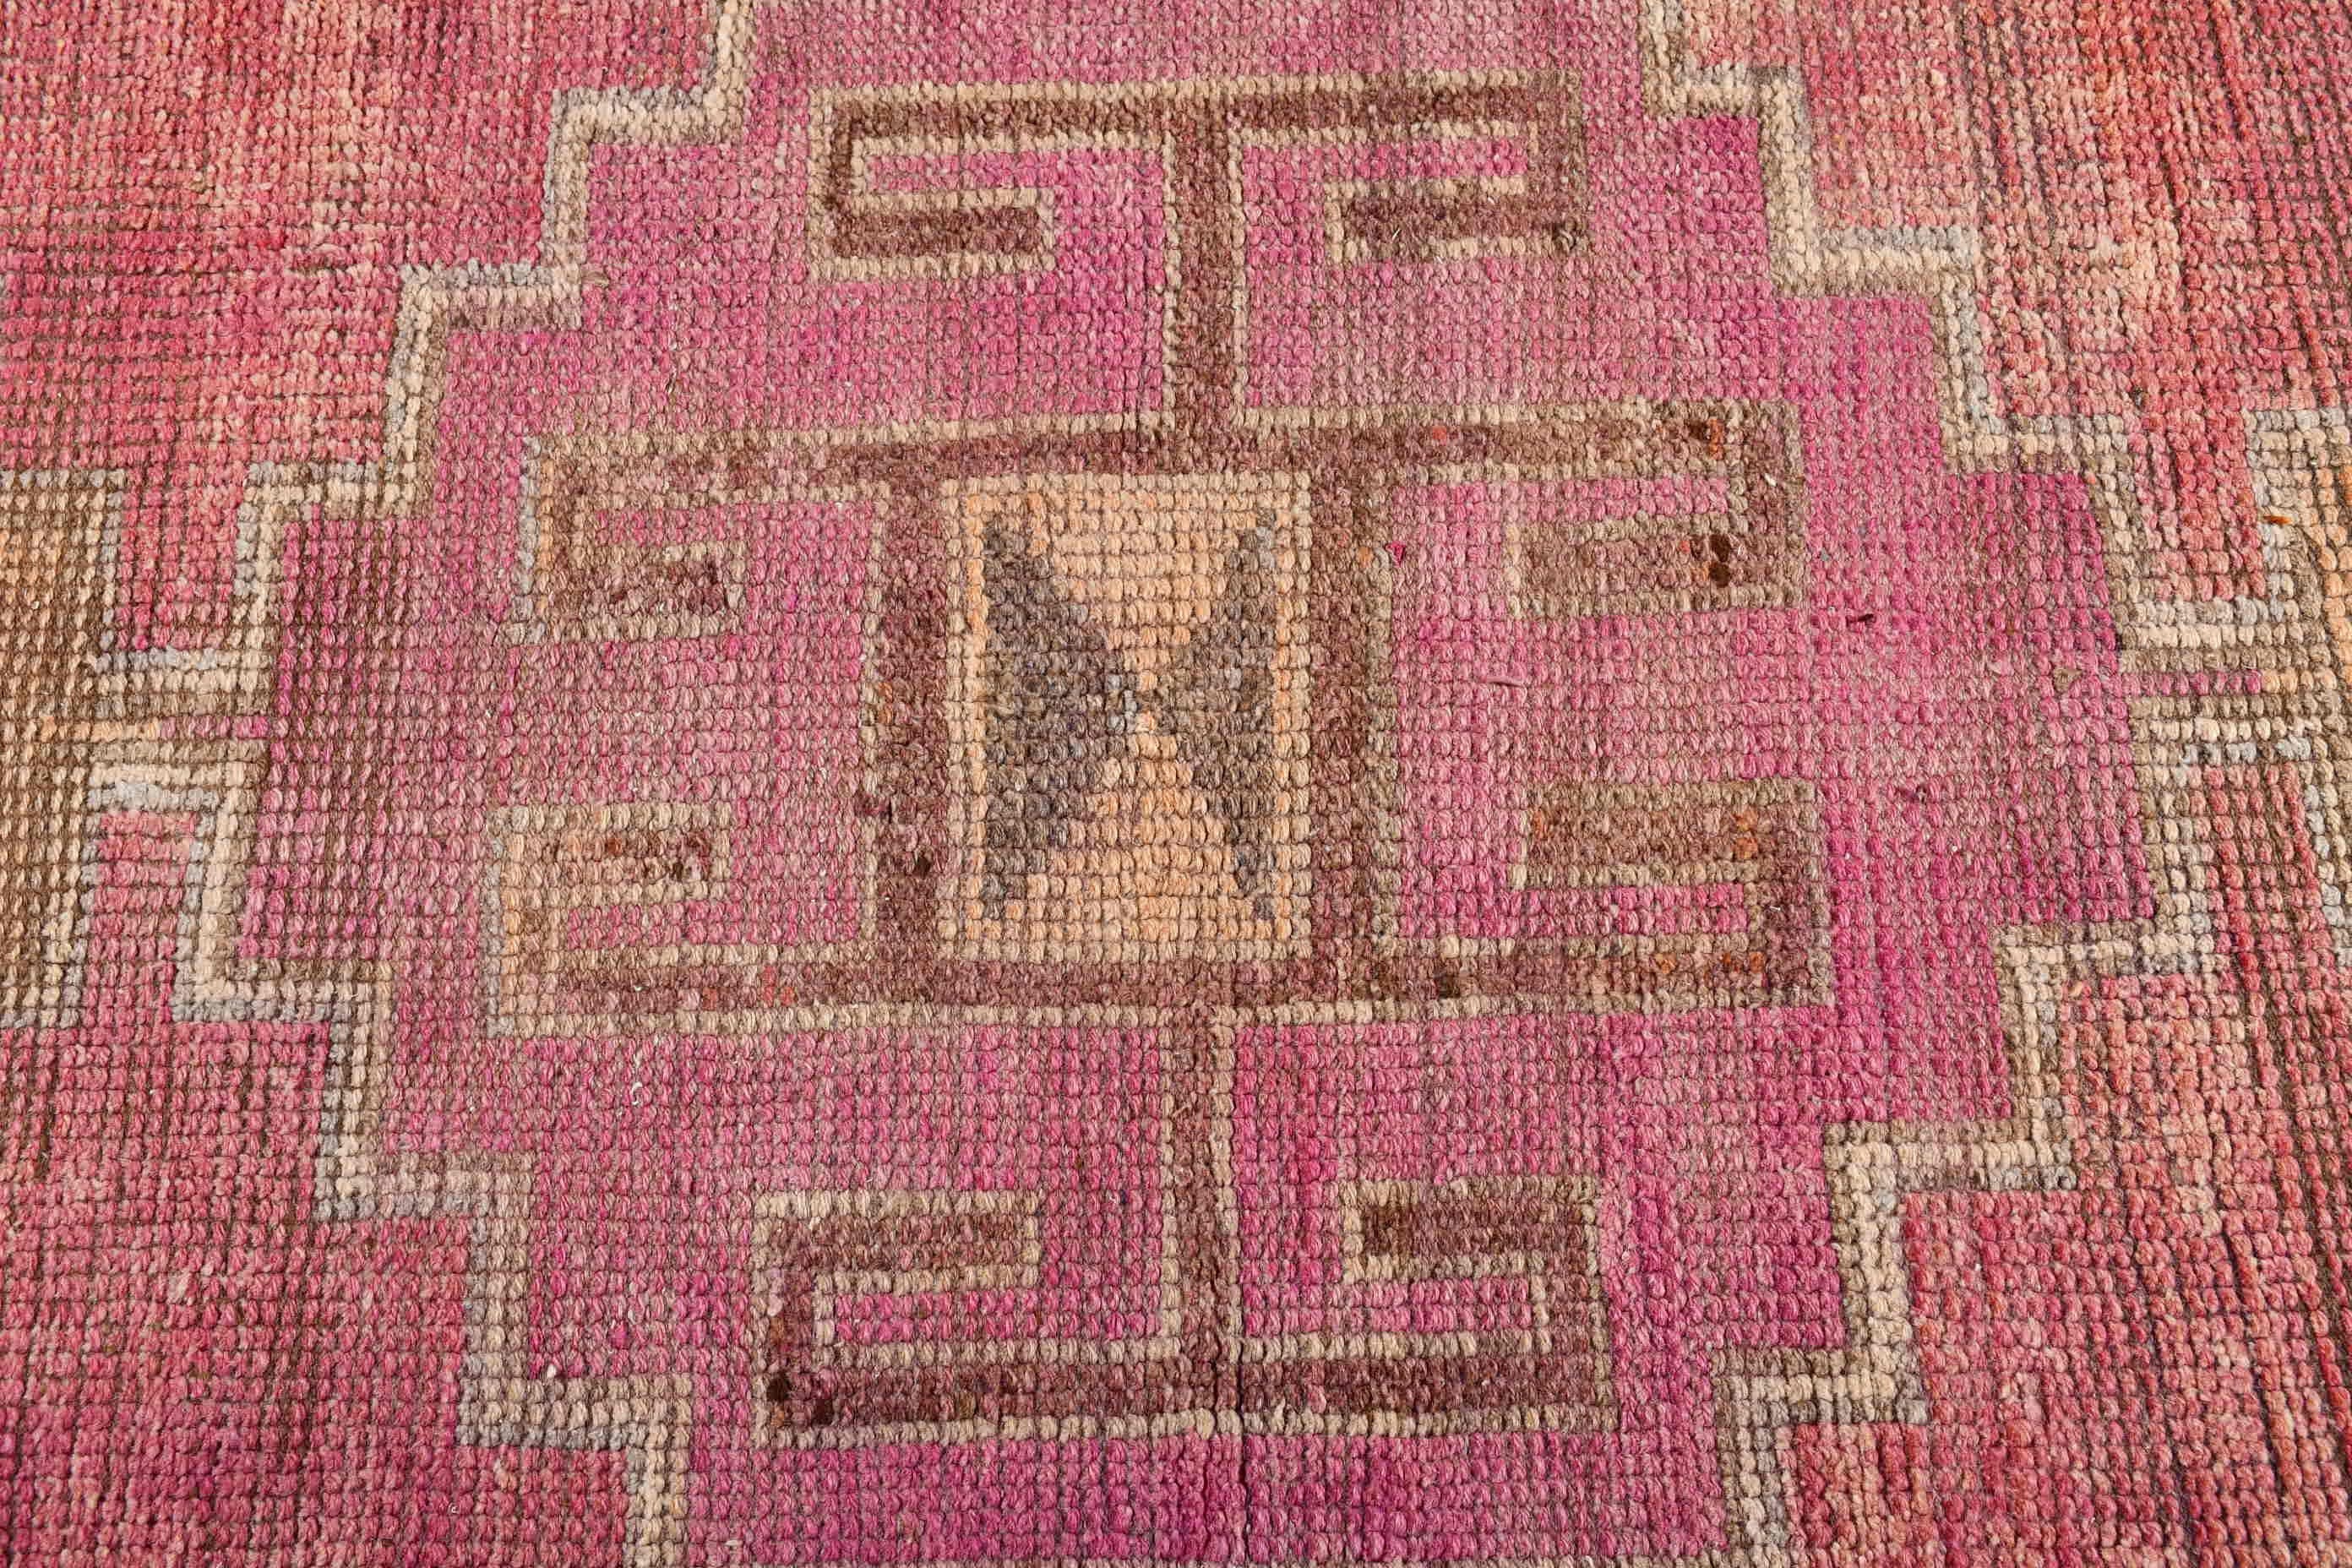 3x9.4 ft Runner Rug, Anatolian Rugs, Turkish Rugs, Pink Home Decor Rugs, Oriental Rug, Hallway Rugs, Vintage Rug, Rugs for Corridor